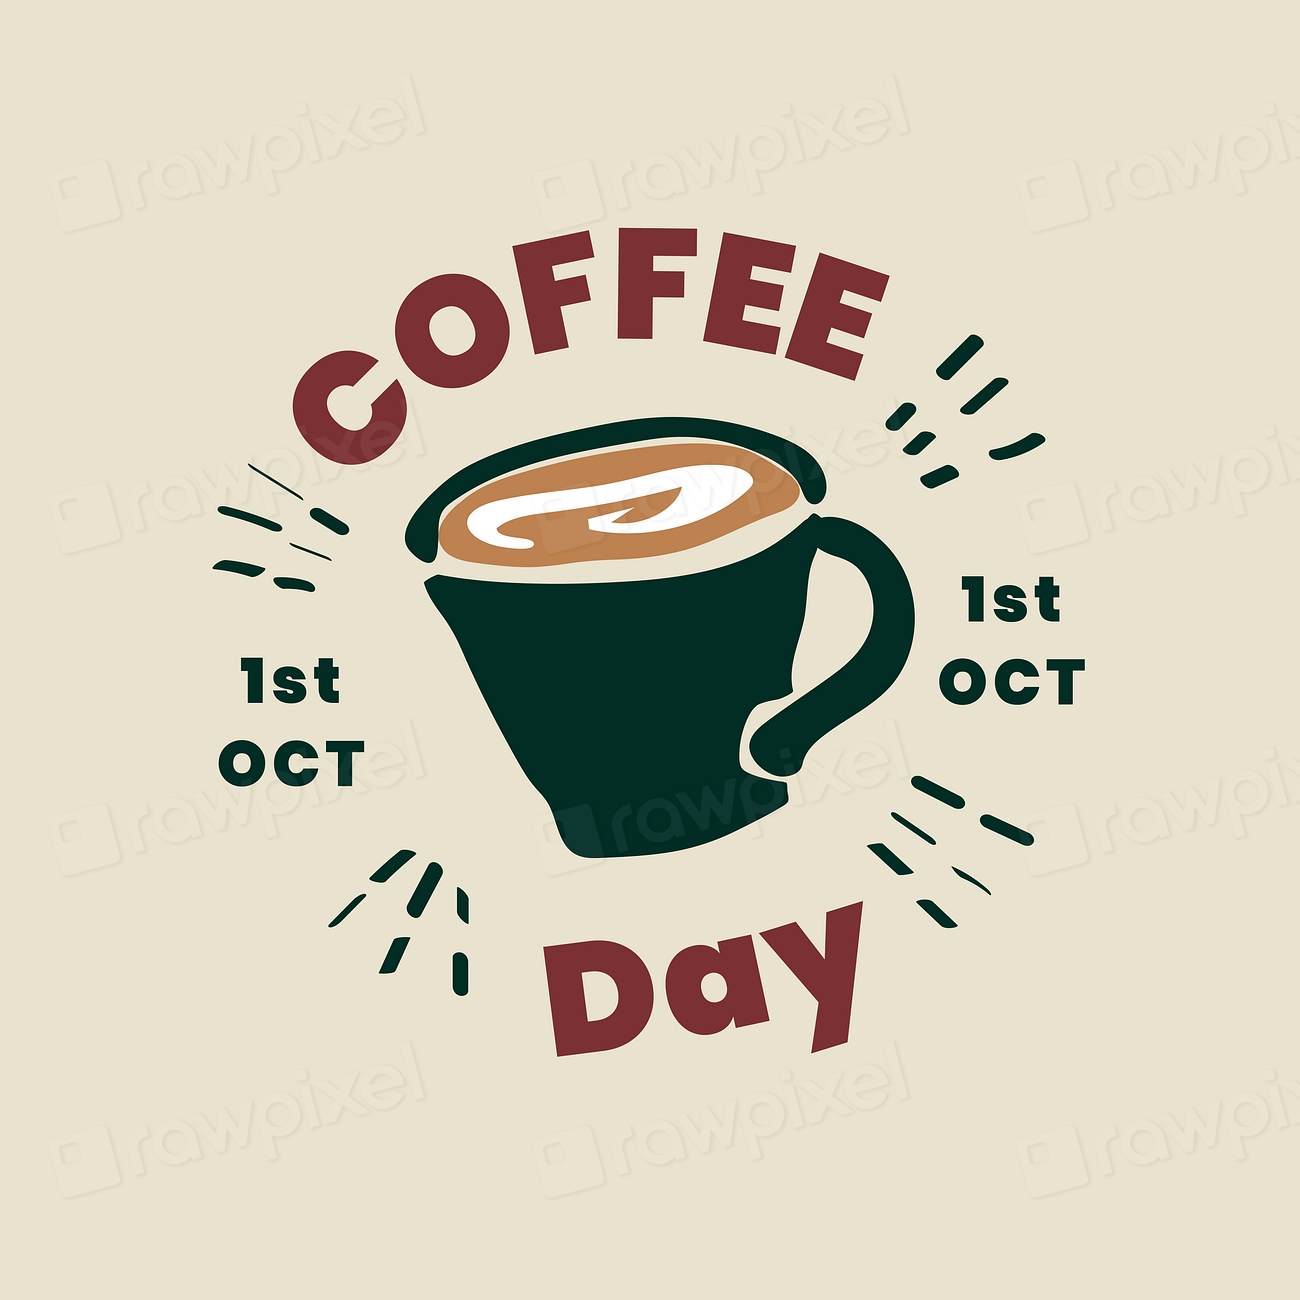 Coffee day logo design vector Premium Vector rawpixel